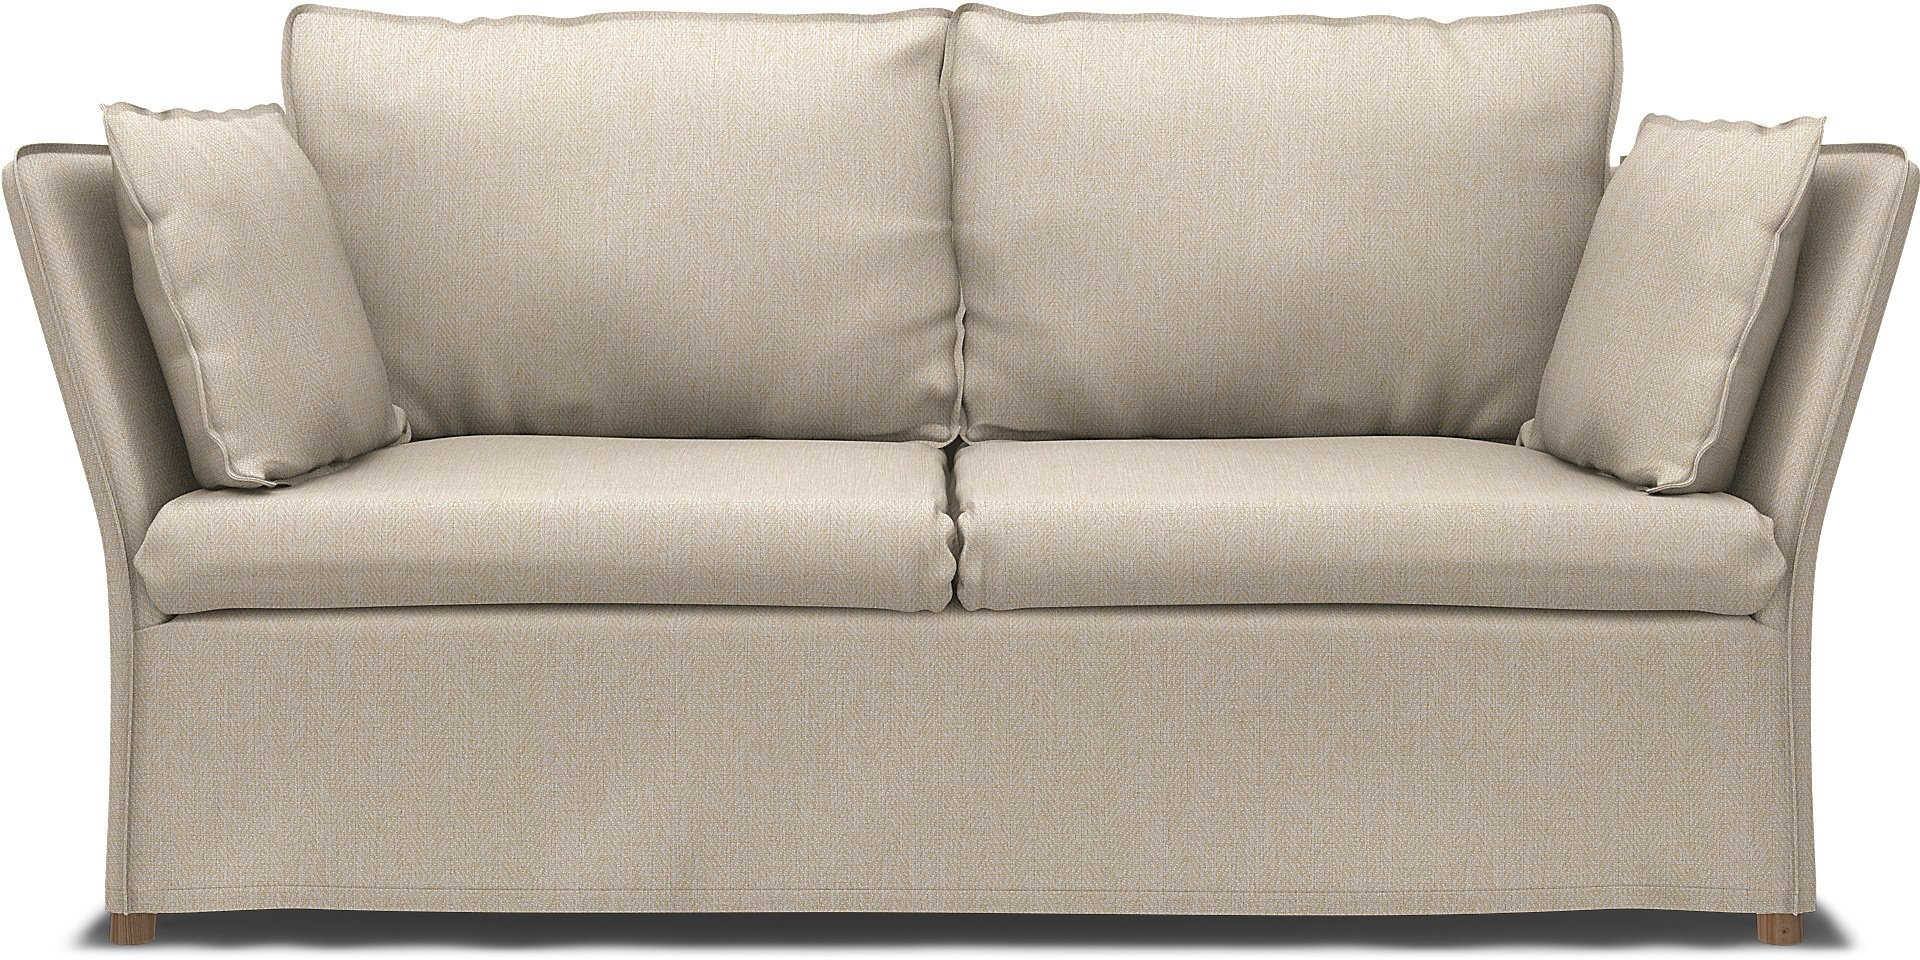 IKEA - Backsalen 2 seater sofa, Natural, Boucle & Texture - Bemz